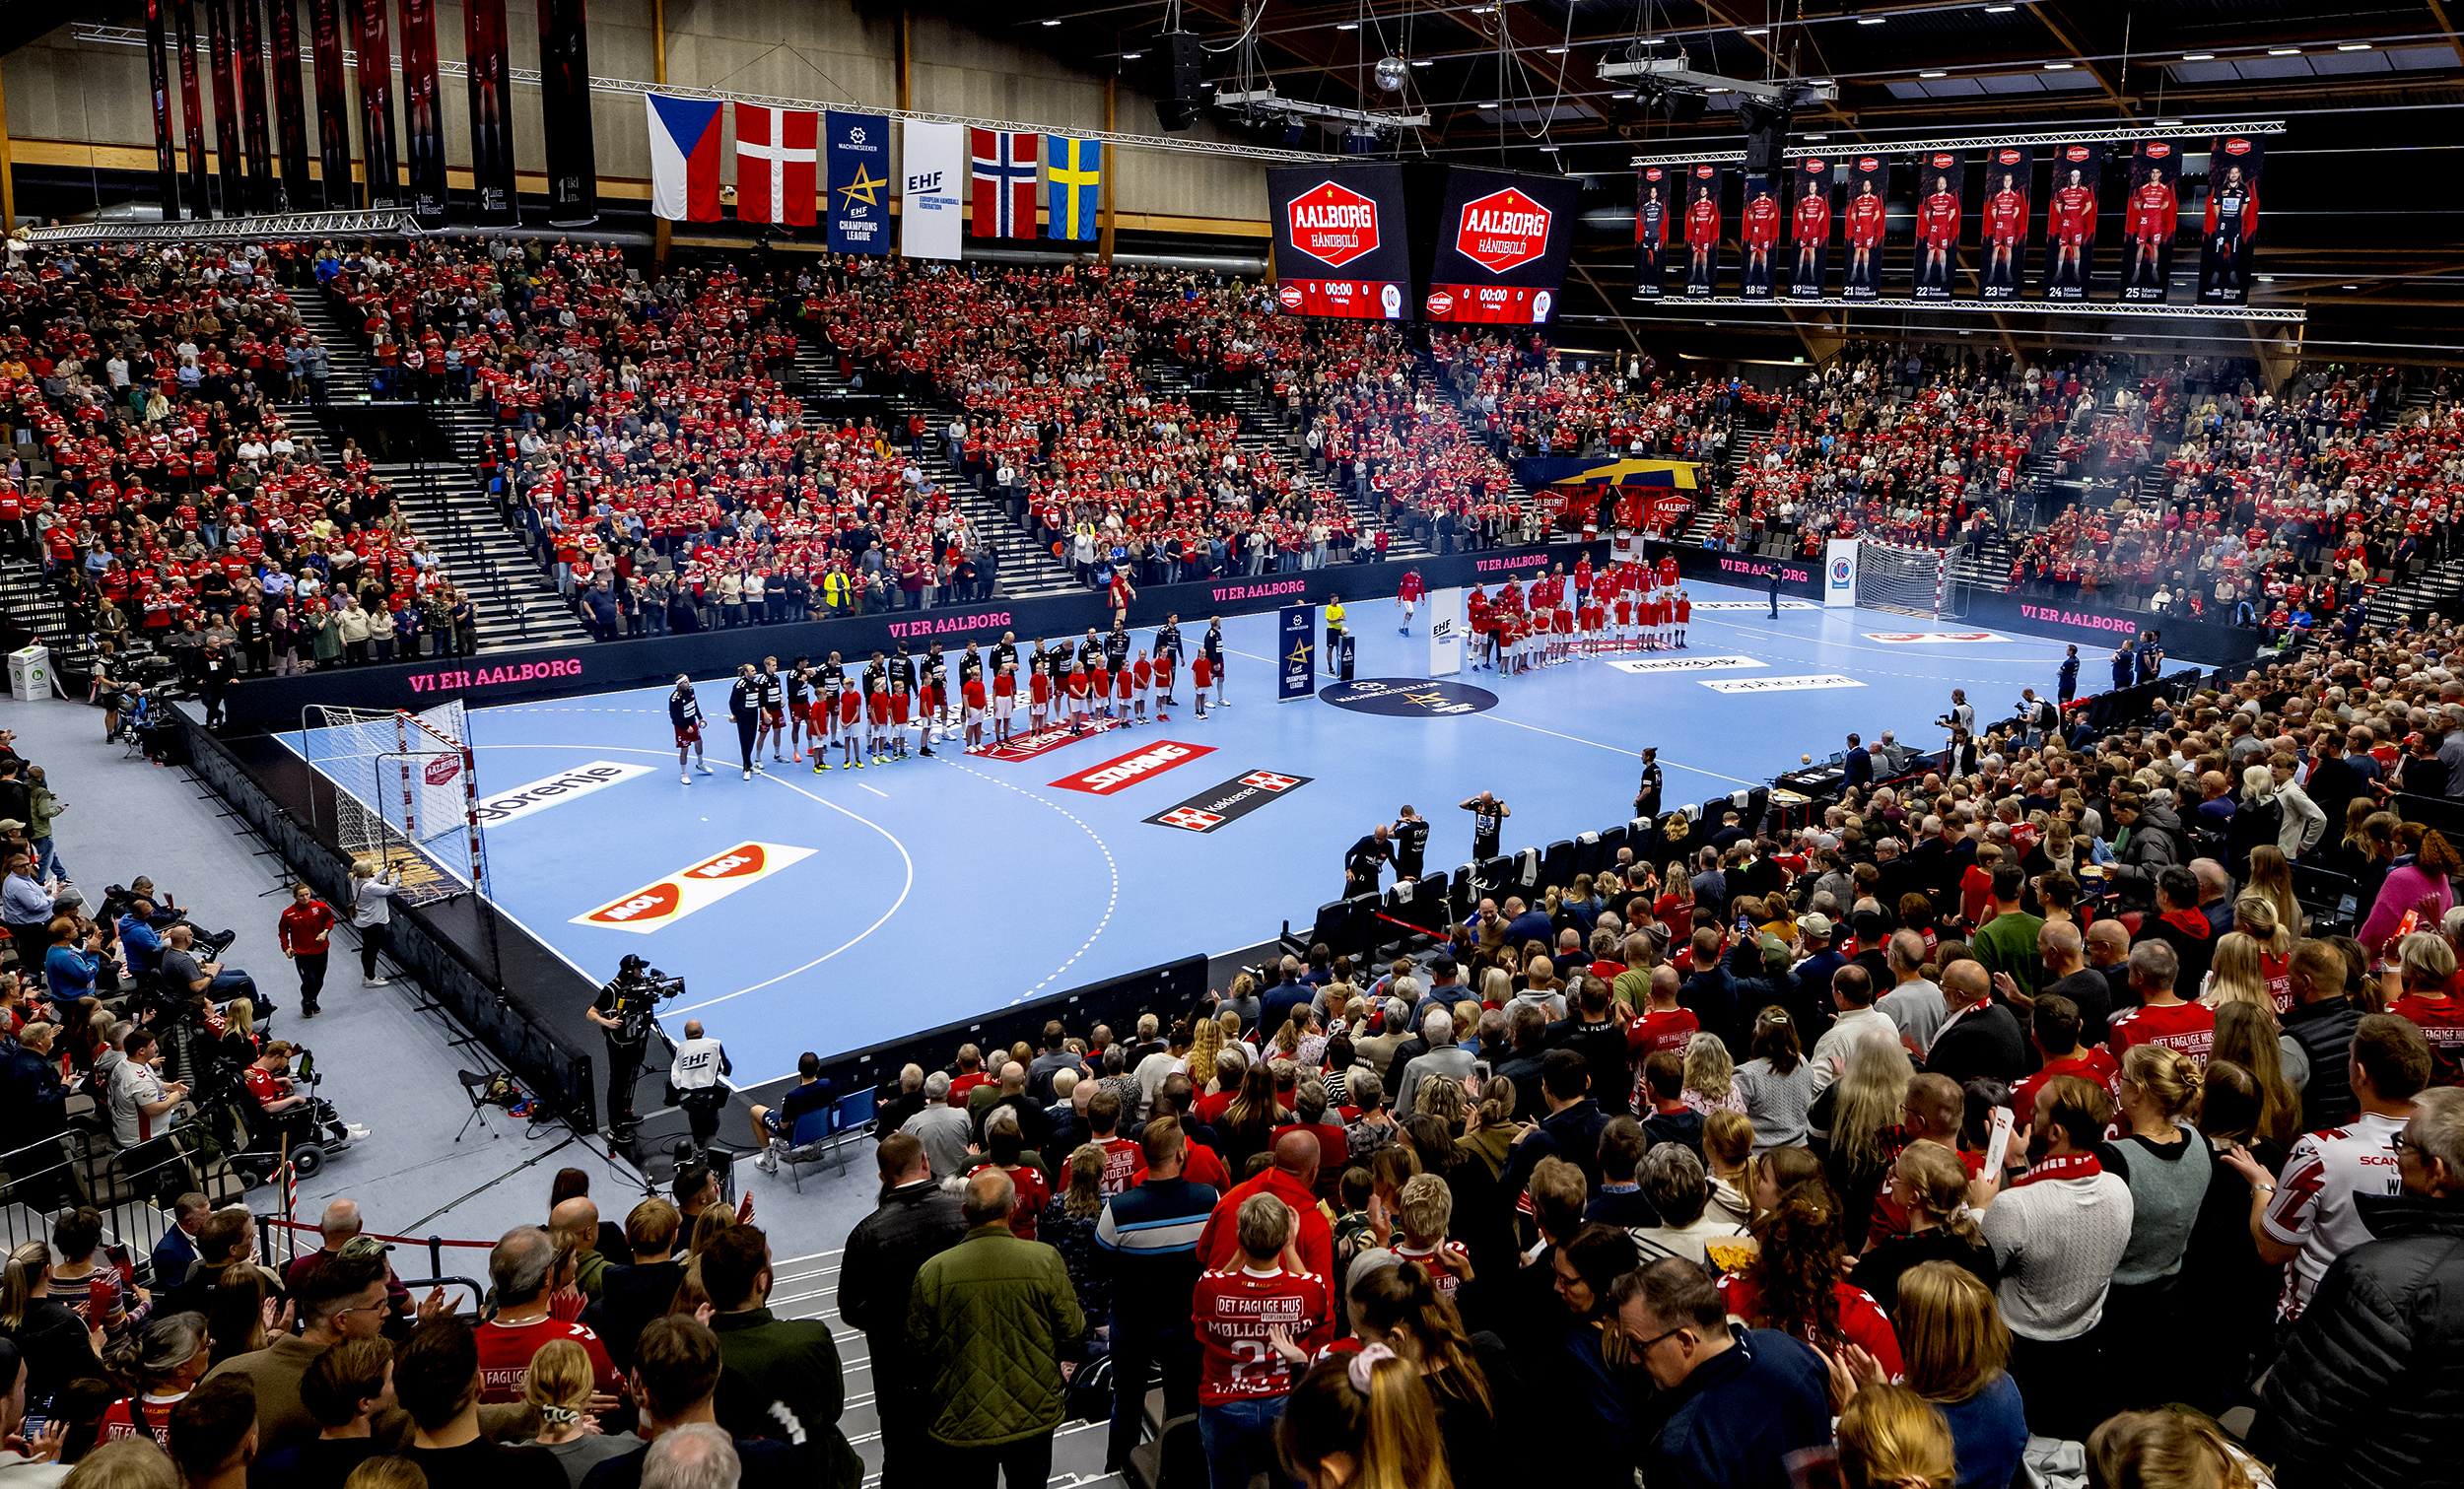 EHF Champions League håndbold i Aalborg.

Aalborg Håndbold - Kolstad Håndbold slut 27-25

Arena